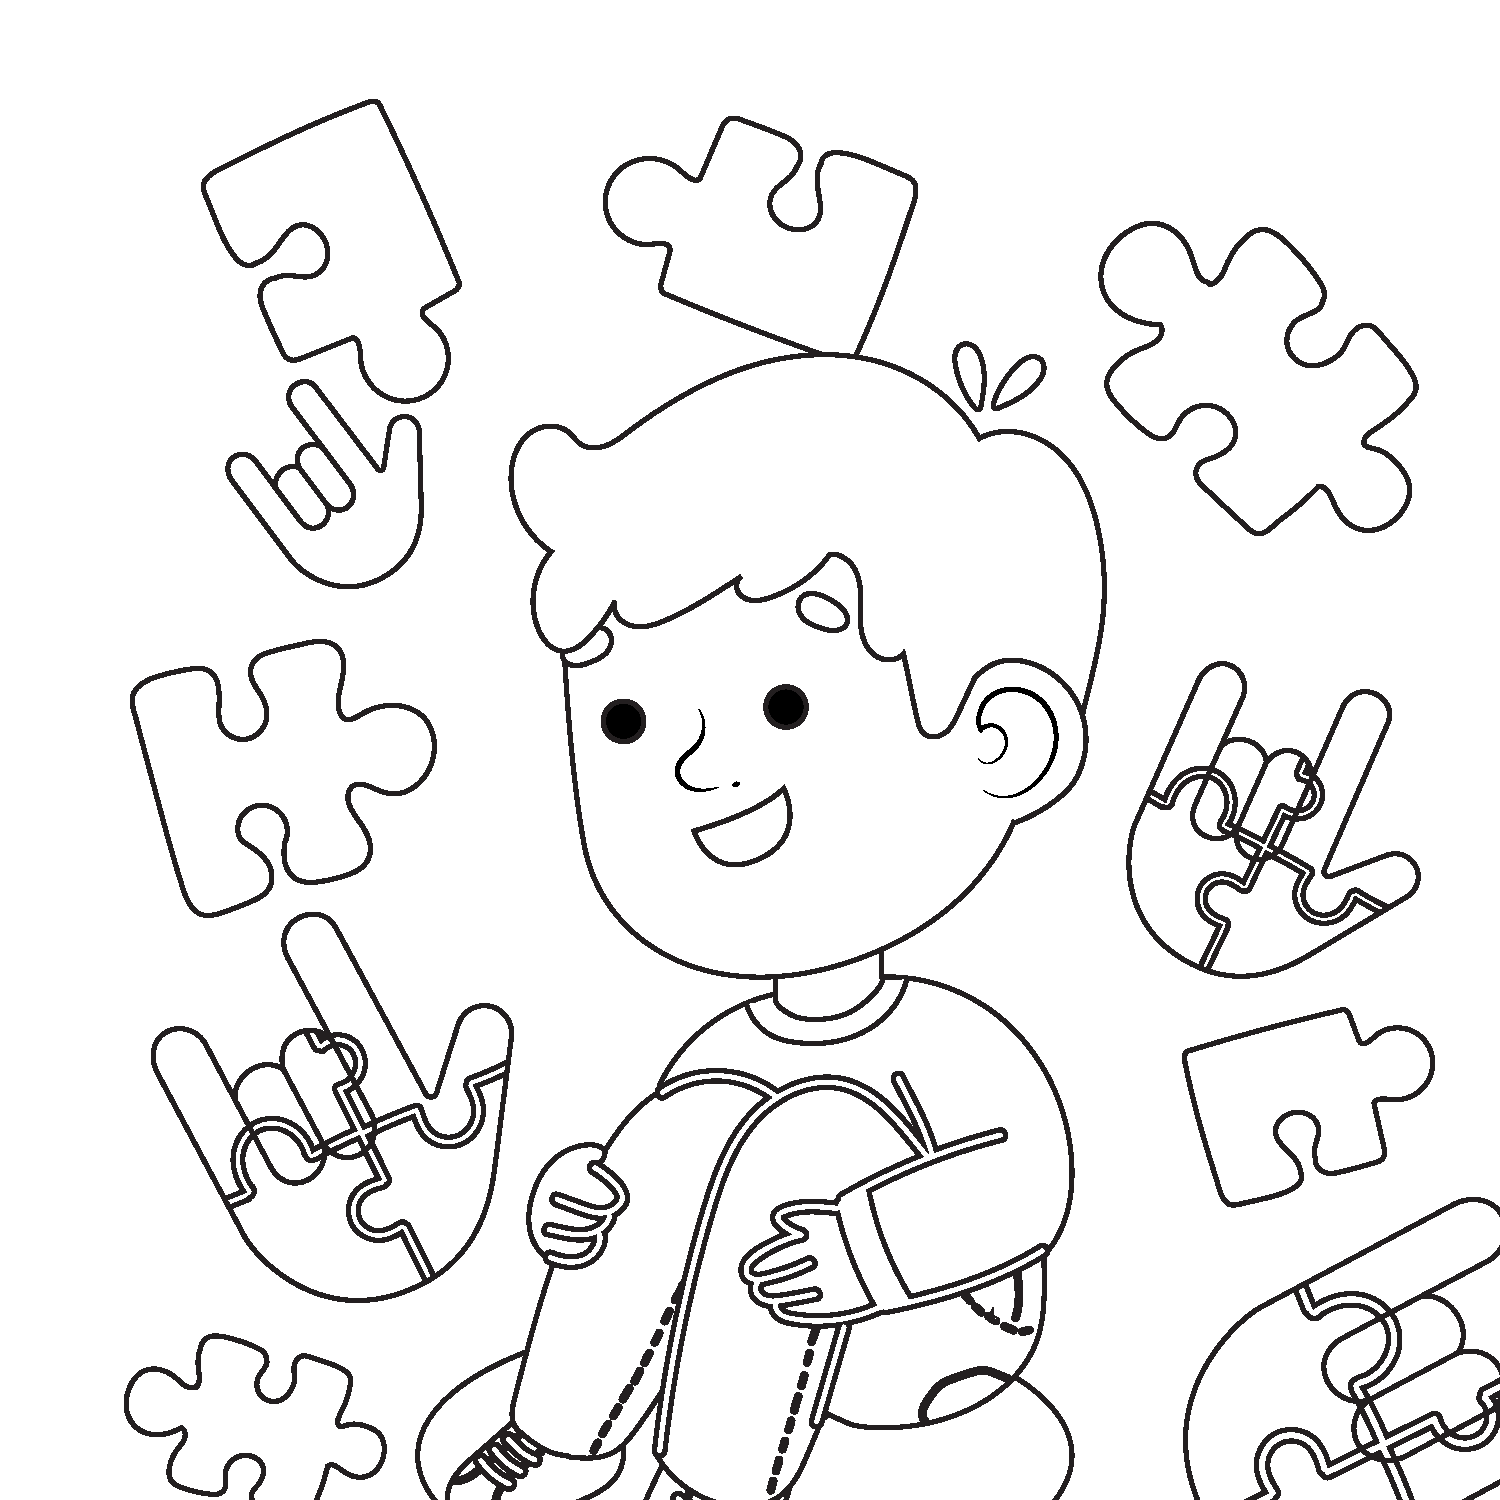 Autism Awareness Coloring Sheets Children (ASL) ASL Teaching Resources